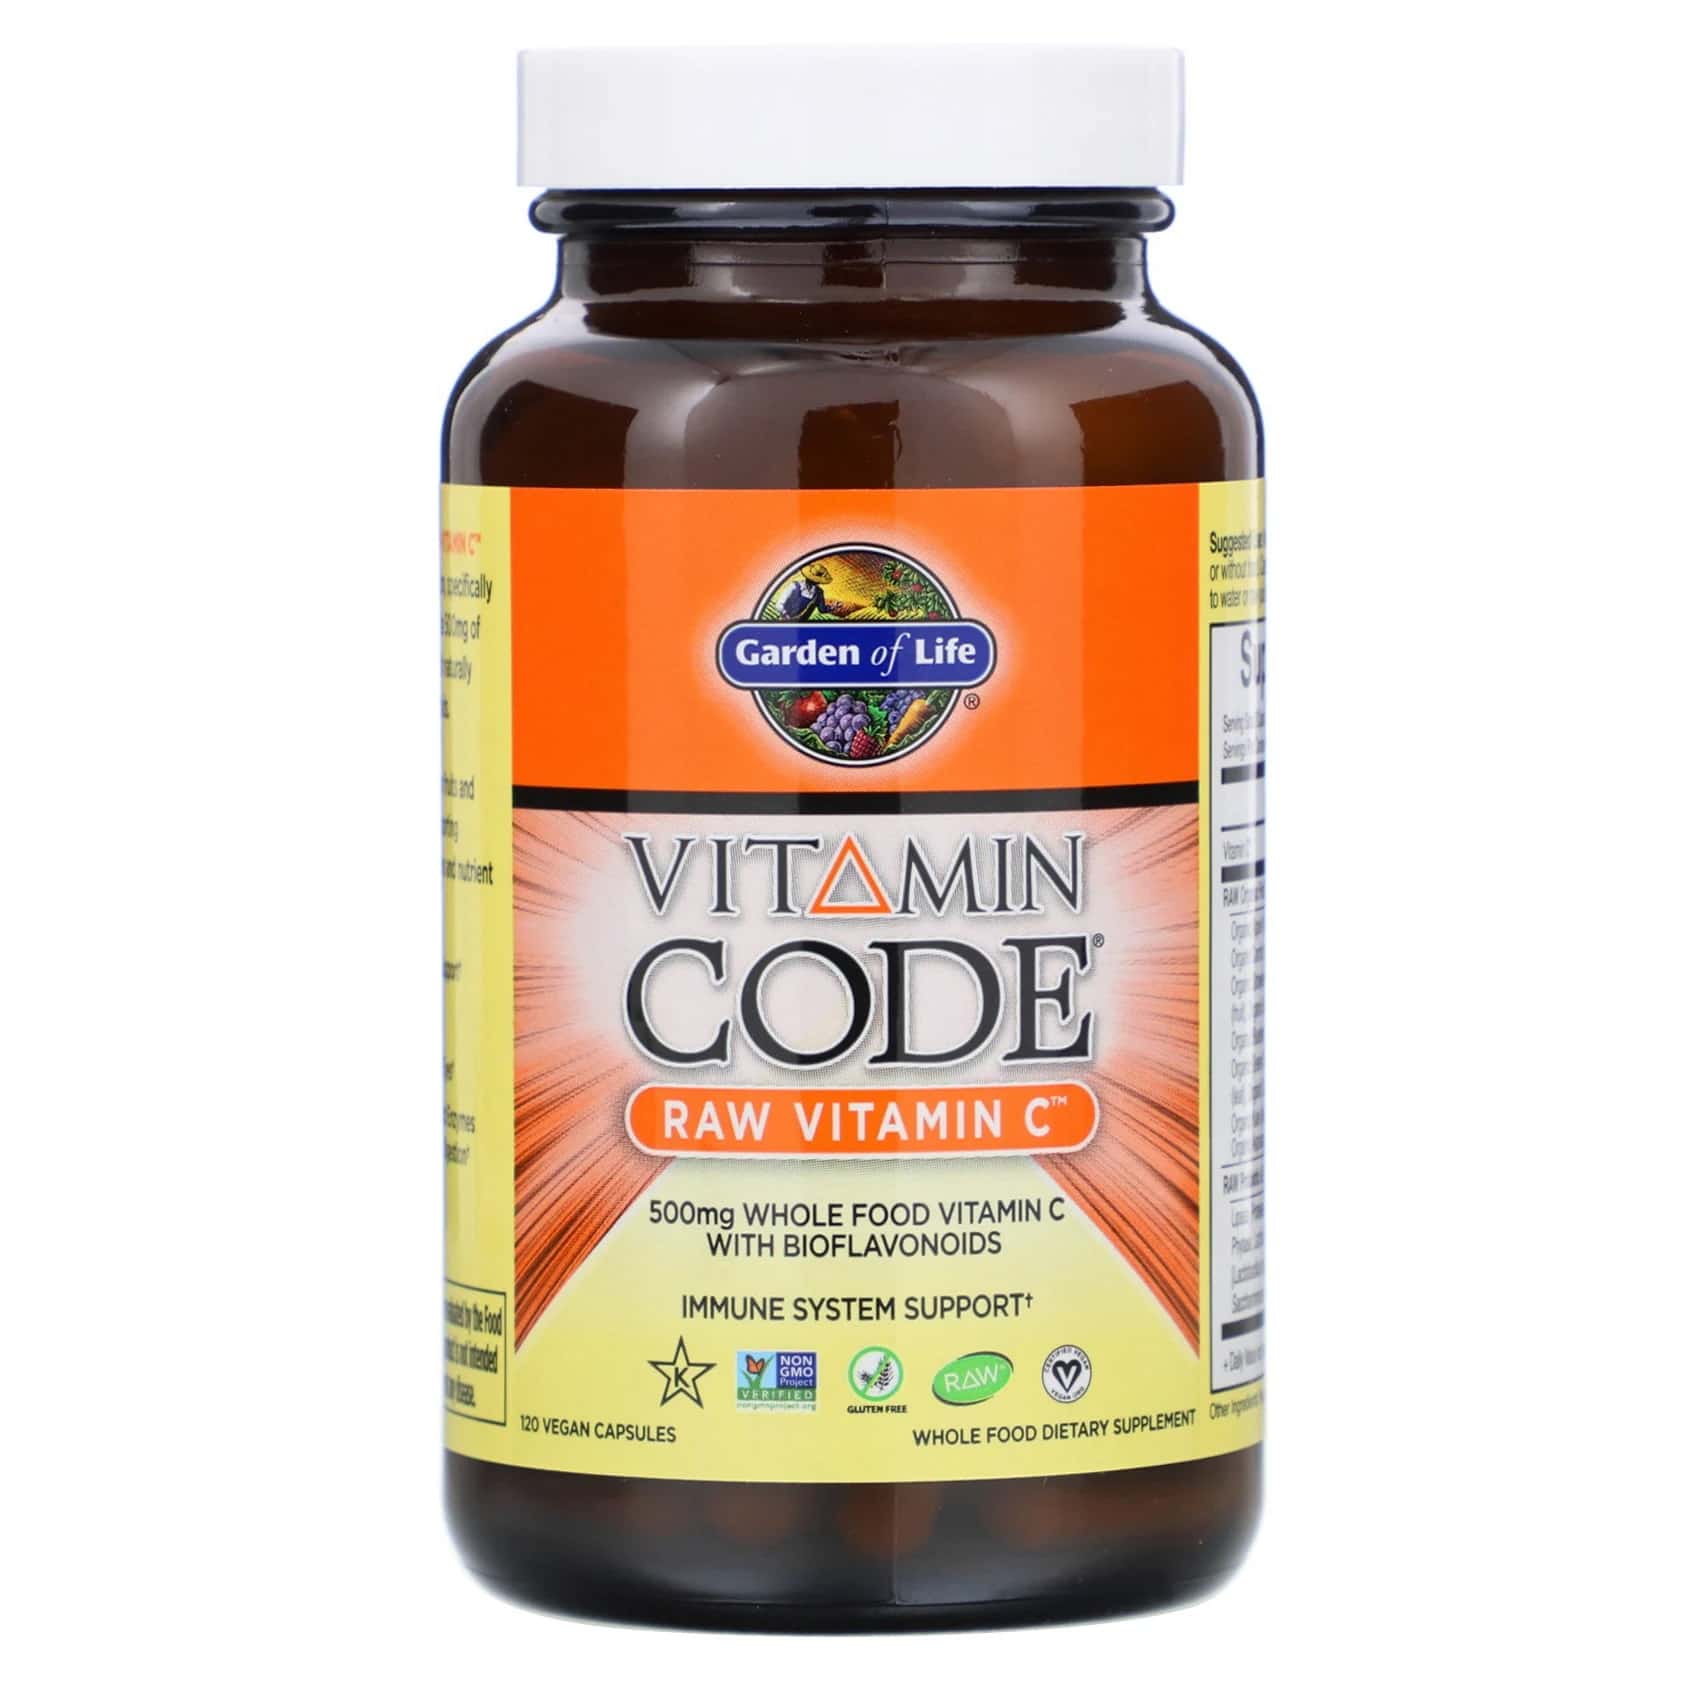 Best Vitamin C Supplement - Garden of Life Vitamin Code Raw Vitamin C Review